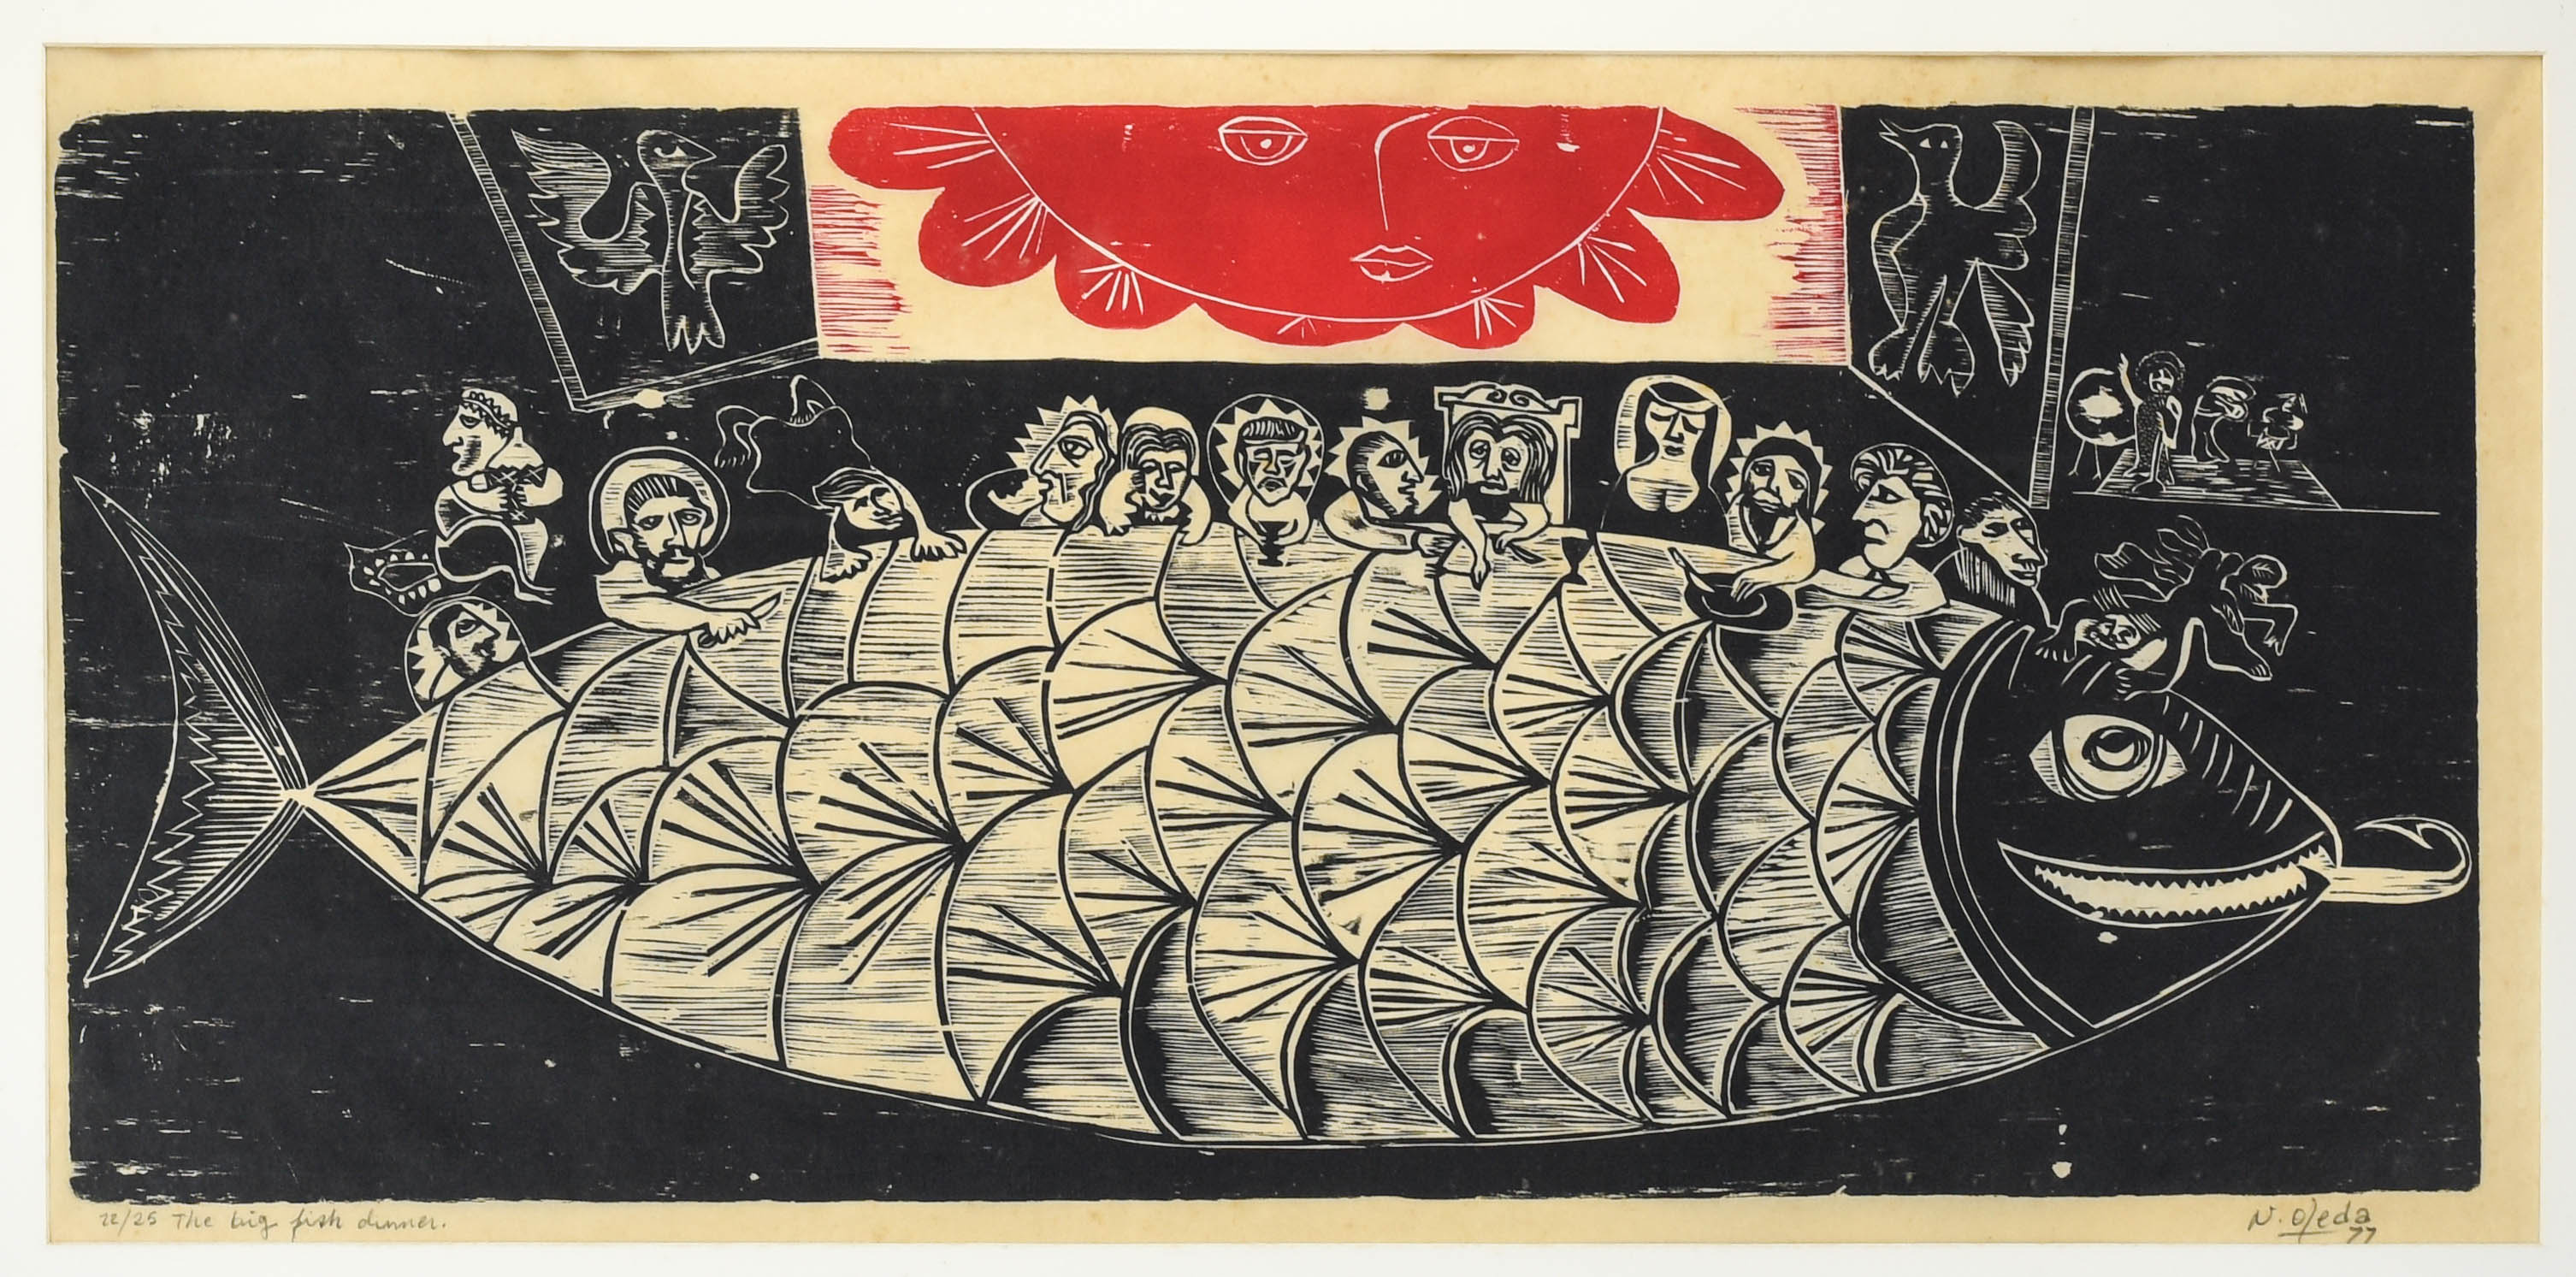 Naul Ojeda The Big Fish Dinner Original Woodcut on Paper